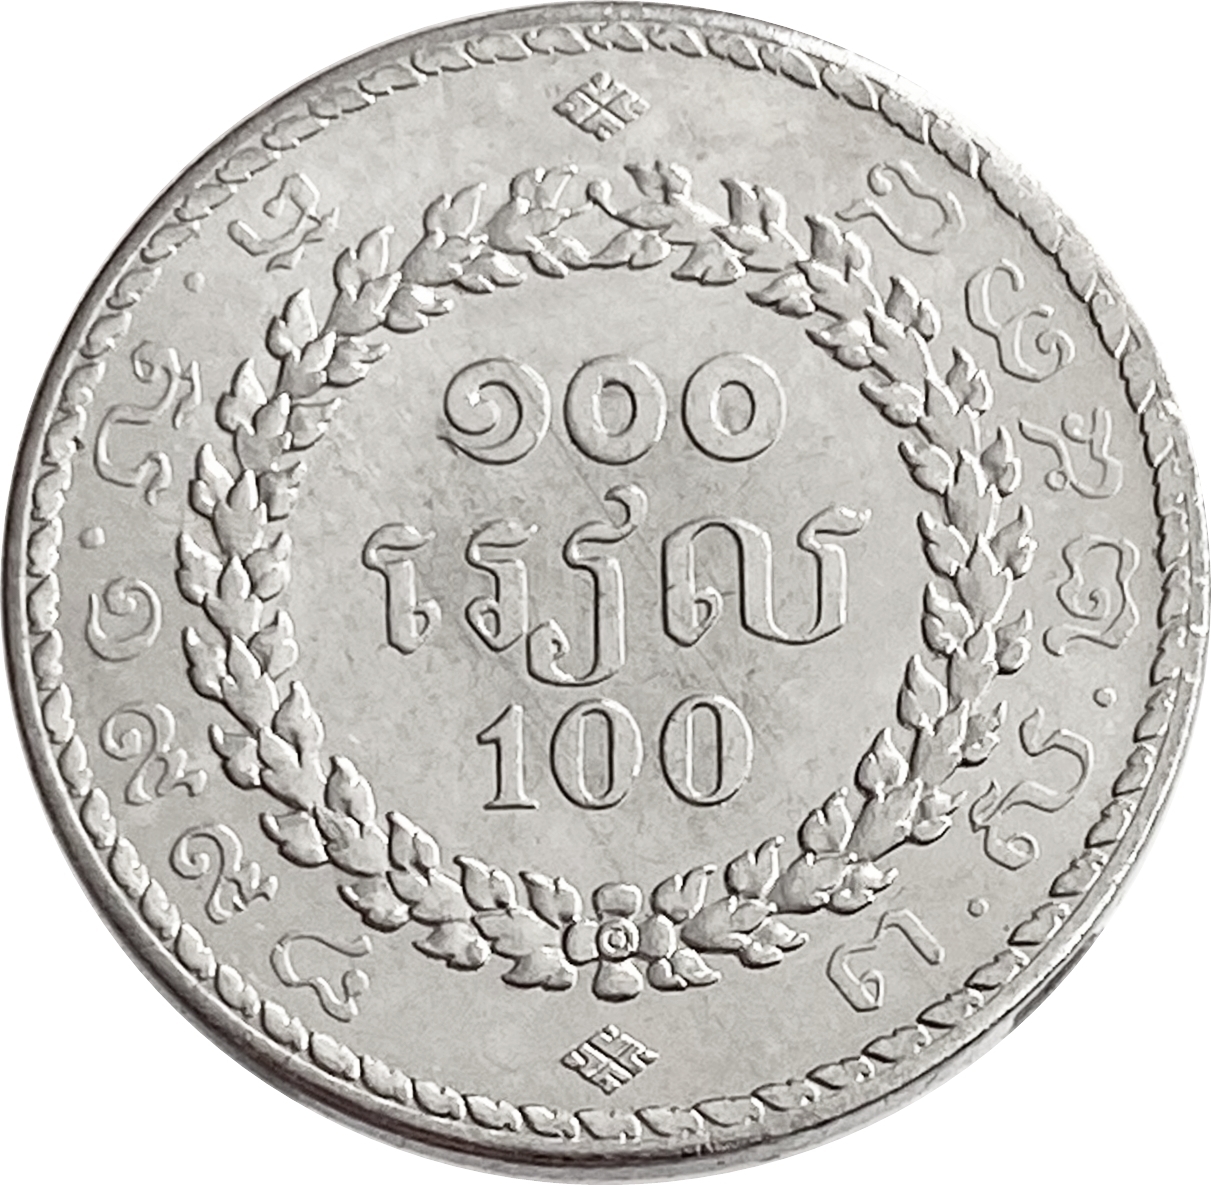 Камбоджа 100 риелей 2014 года. Монеты Камбоджи. Монета 50 Камбоджа. 100 Риелей 2014 Камбоджа в рублях.